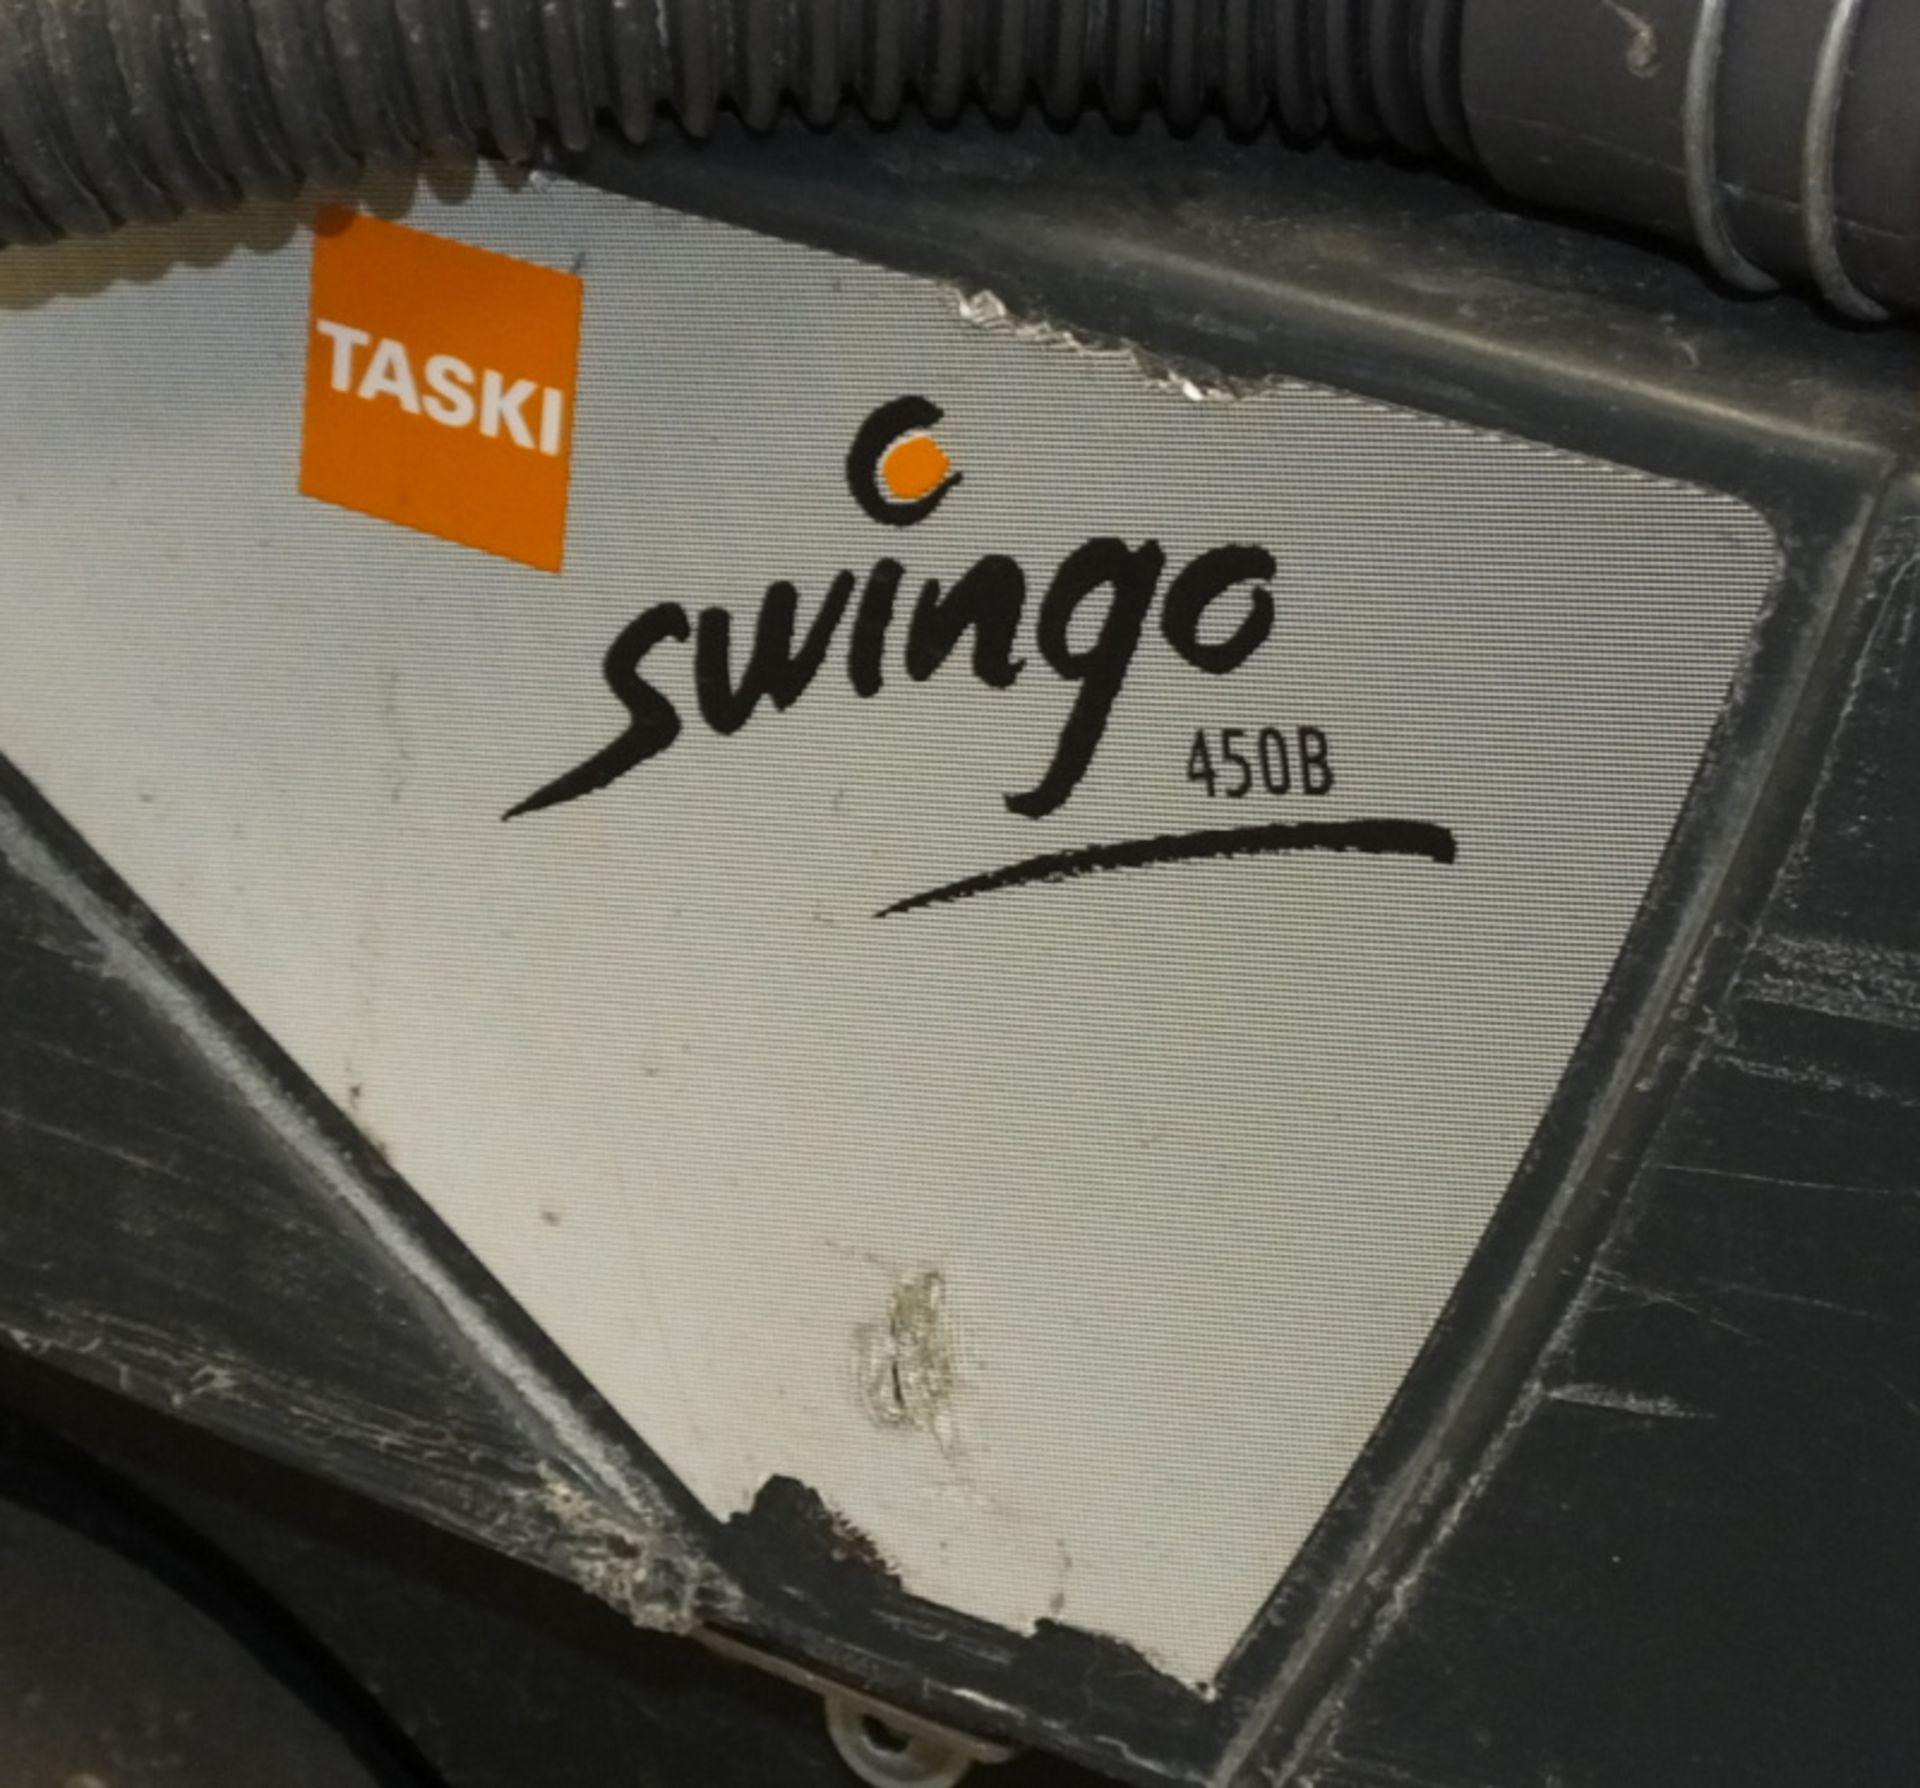 Taski Swingo 450B Scrubber Dryer CO450.0 - doesn't power up - Image 2 of 9